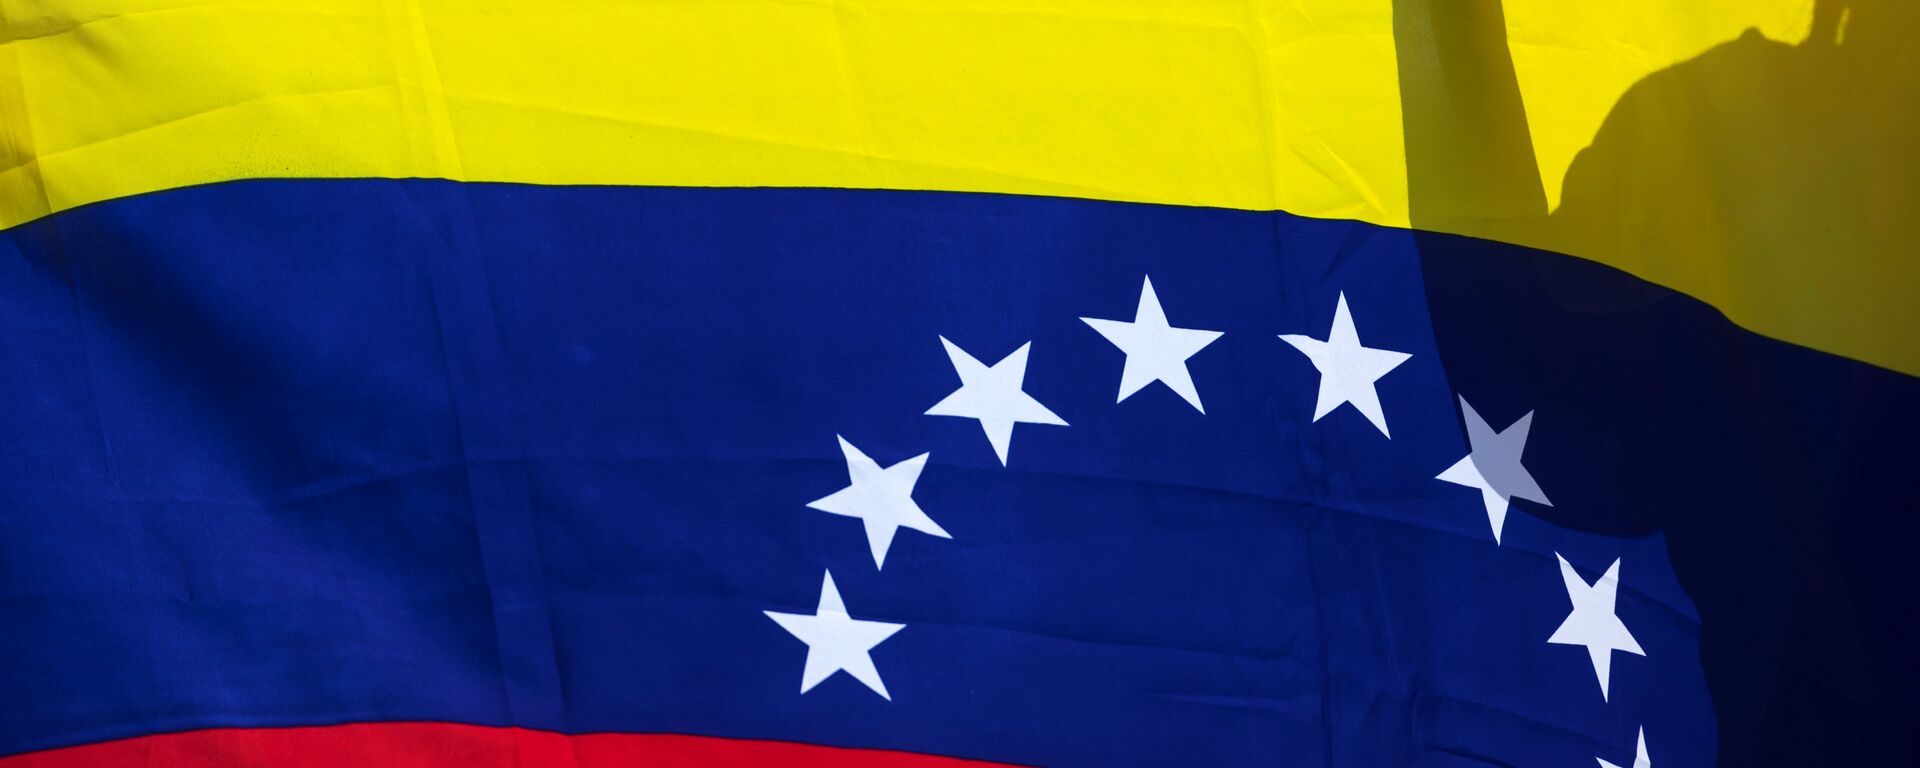 Bandera de Venezuela - Sputnik Mundo, 1920, 01.09.2021